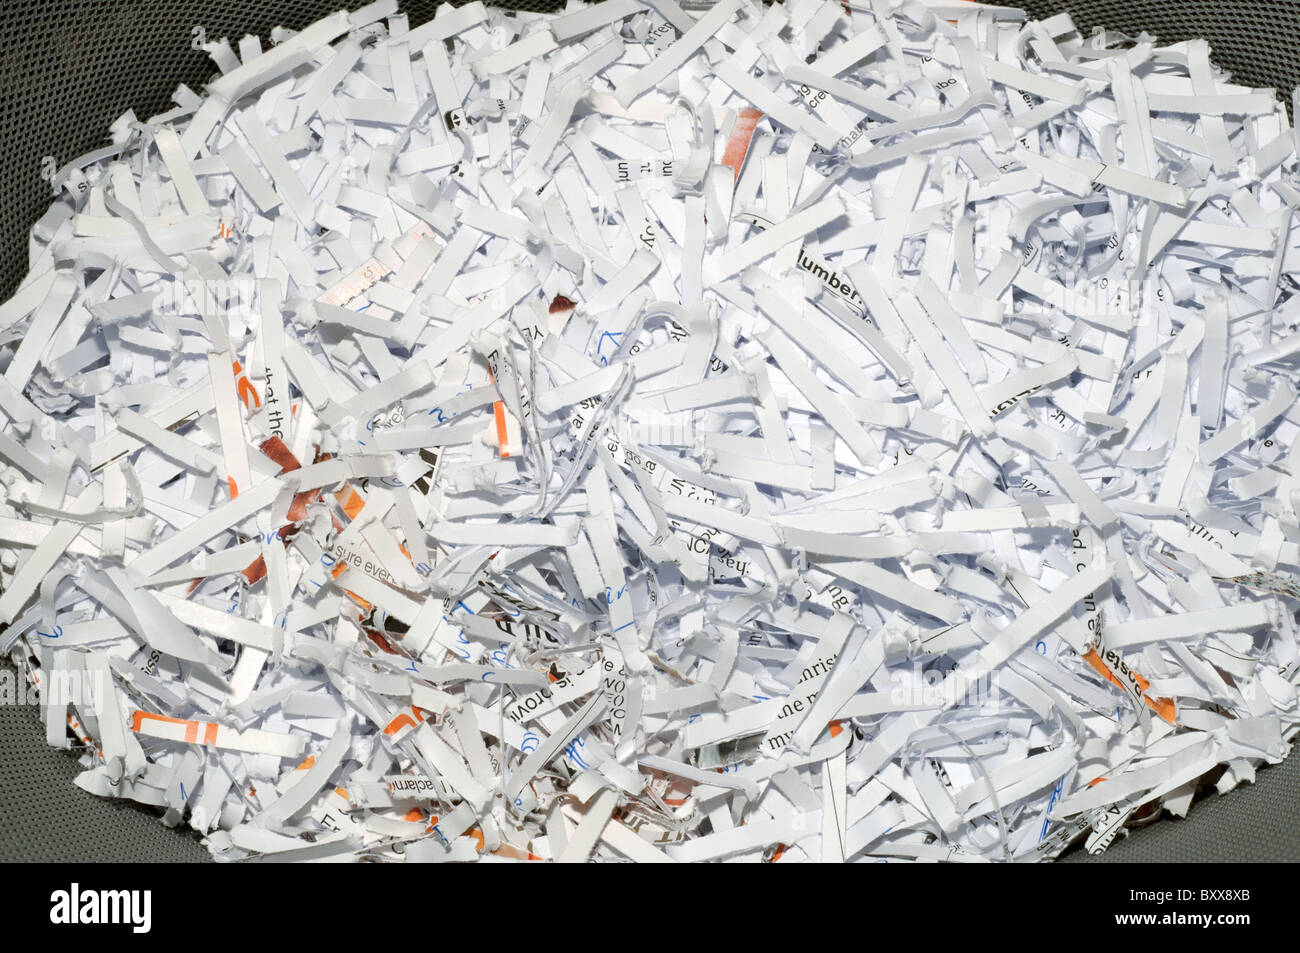 Shredded Paper in a Bin Stock Photo